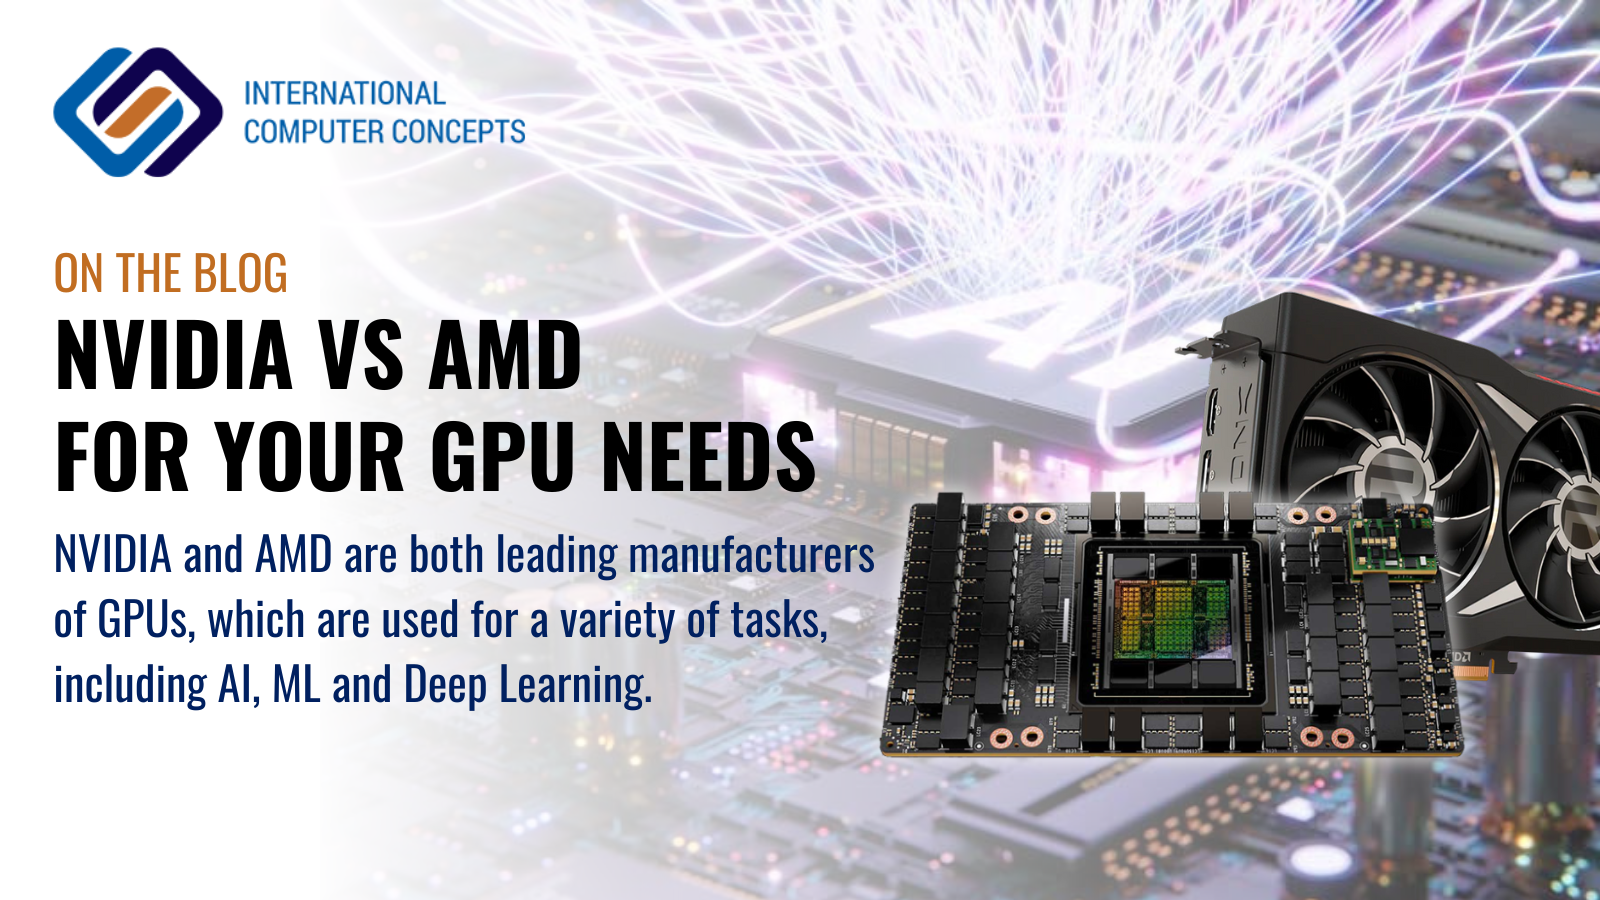 NVIDIA vs AMD for your GPU needs